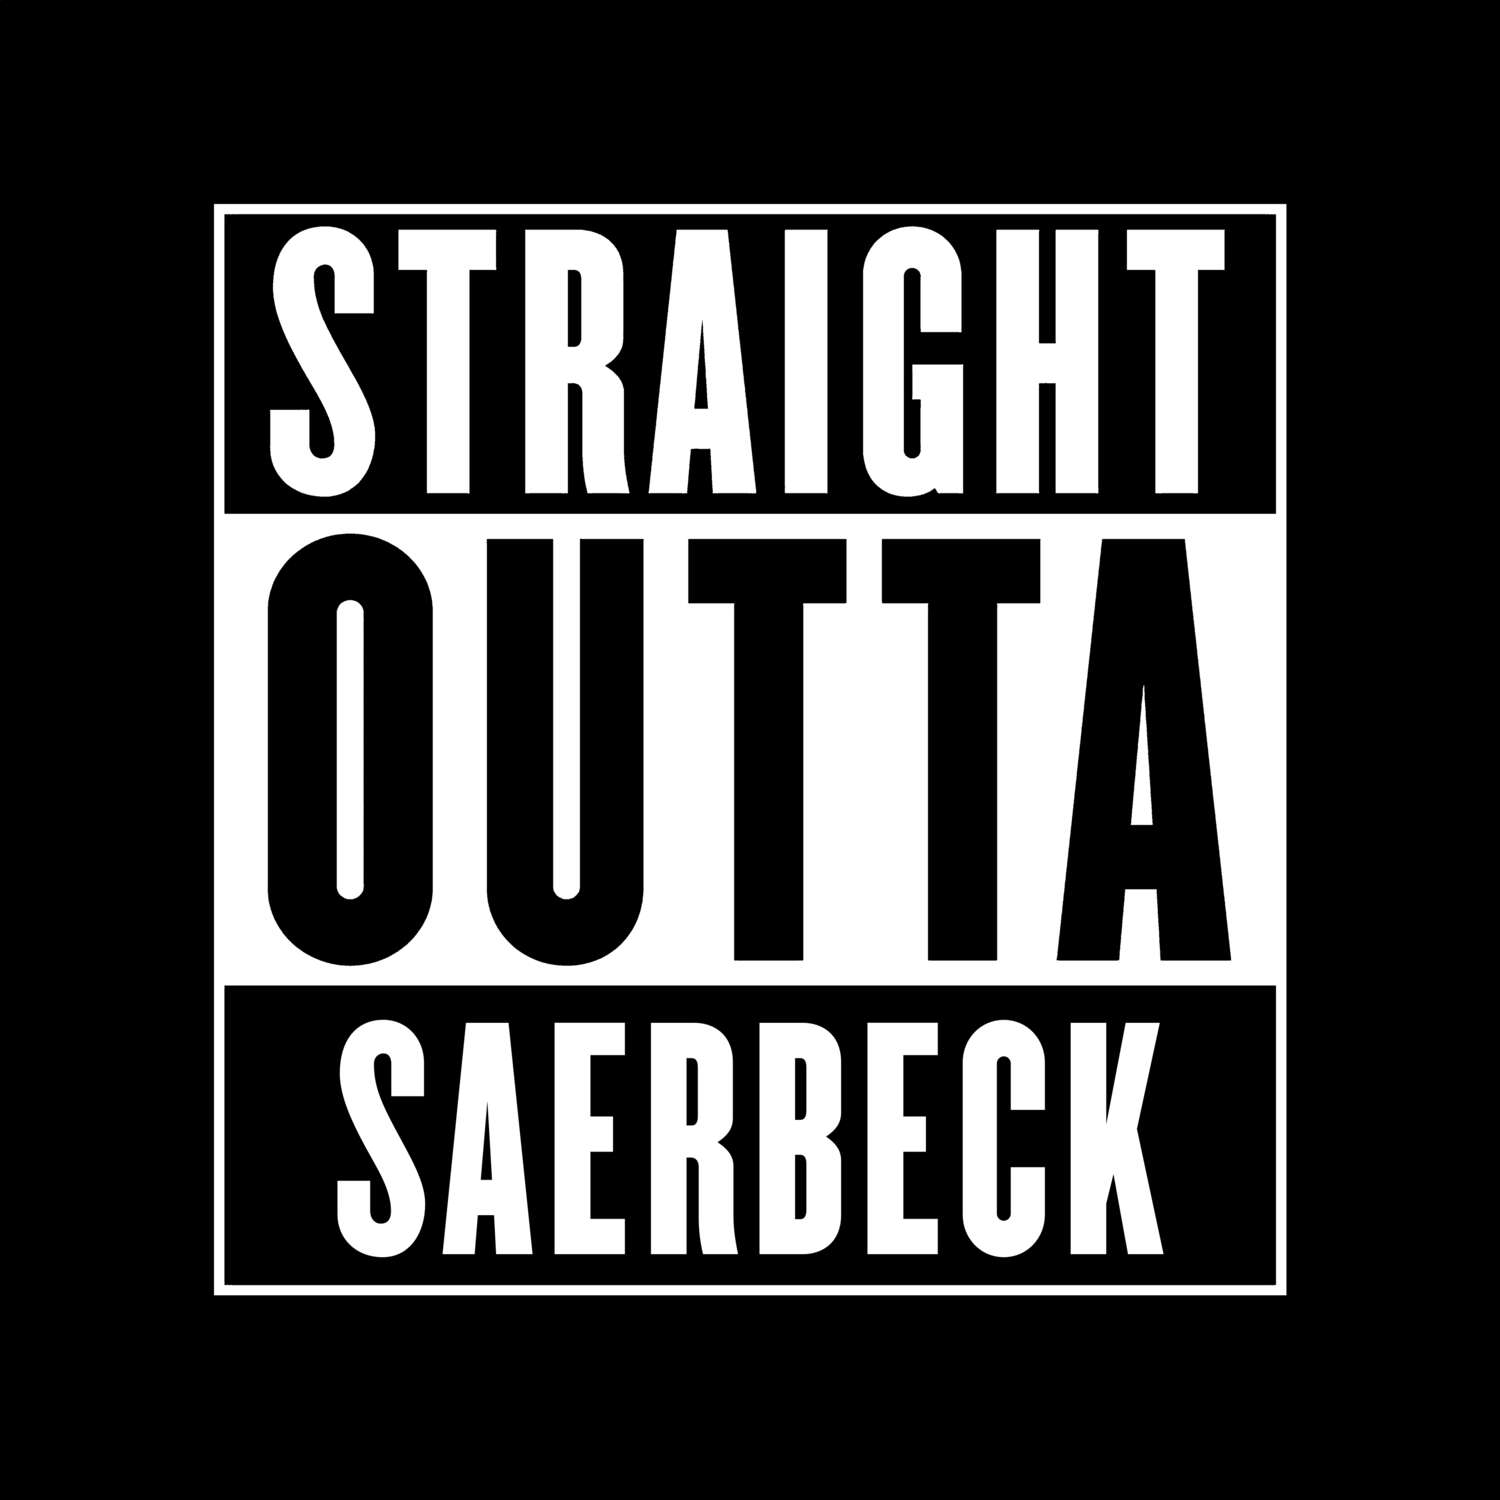 Saerbeck T-Shirt »Straight Outta«